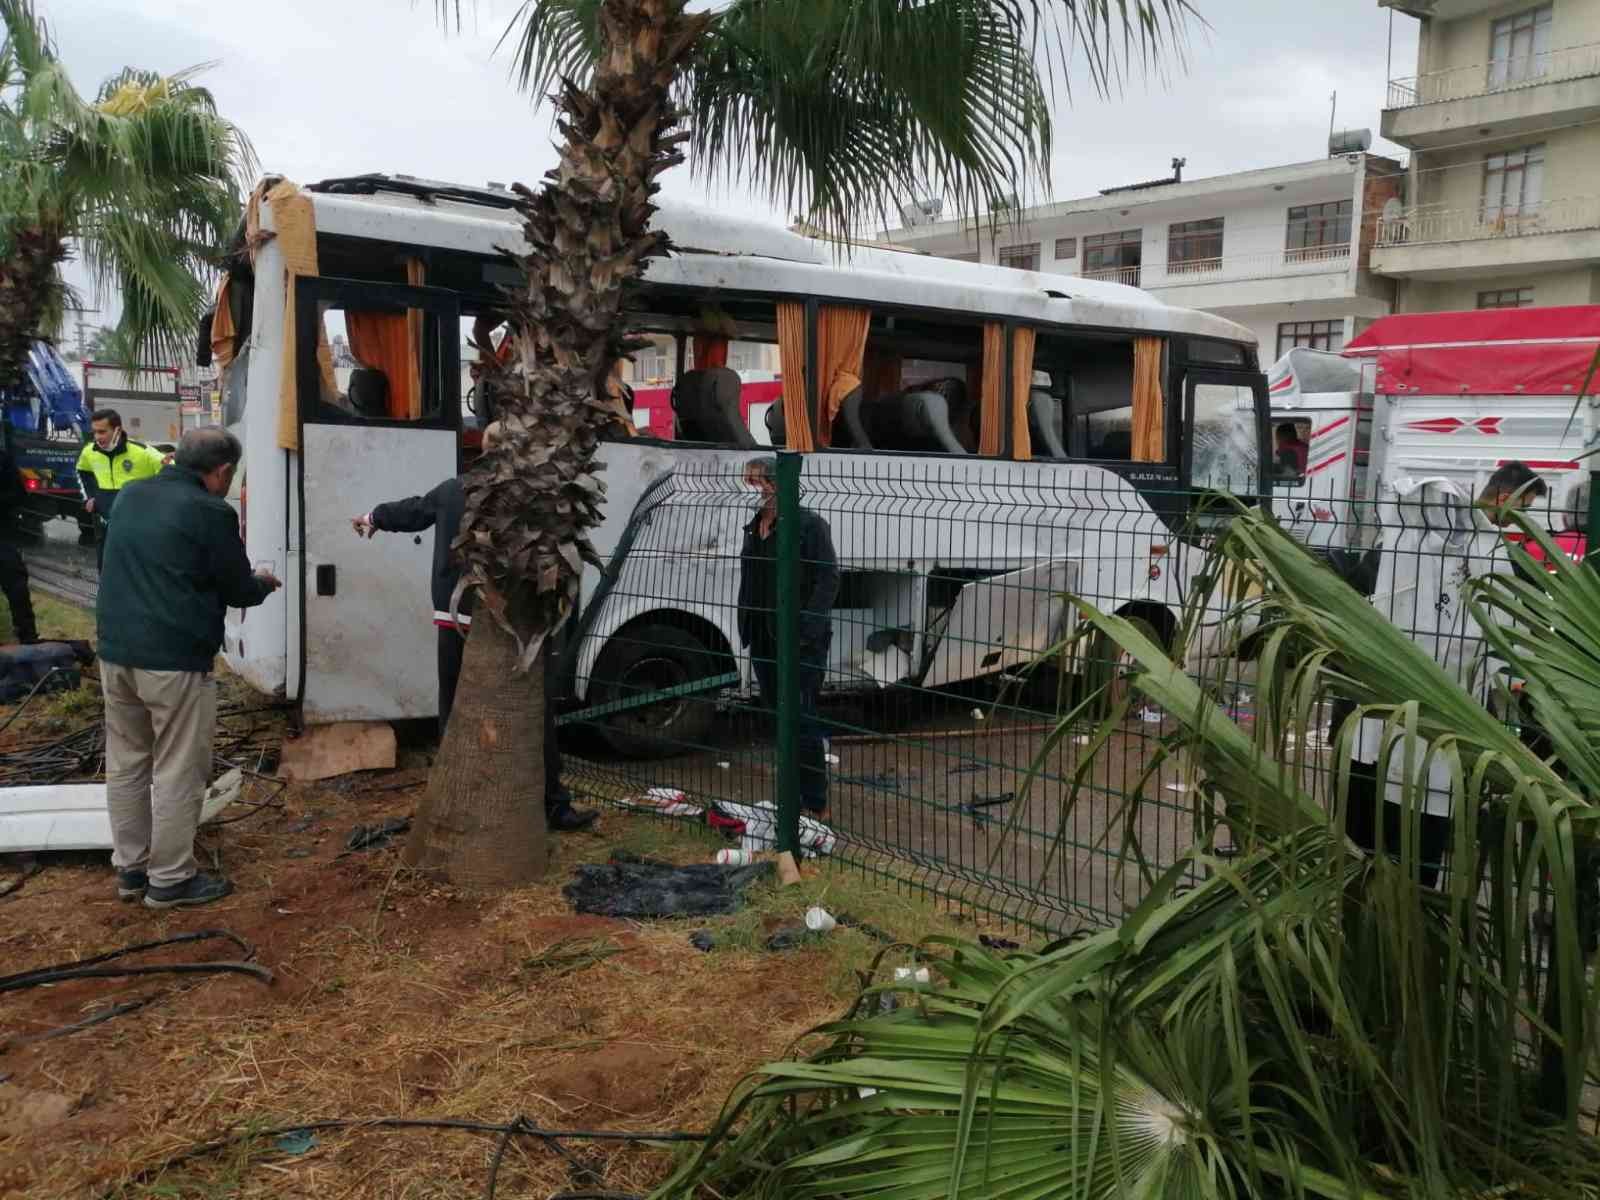 Antalya’da turistleri taşıyan midibüs takla attı: 2’si çocuk 8 Rus turist yaralandı #antalya